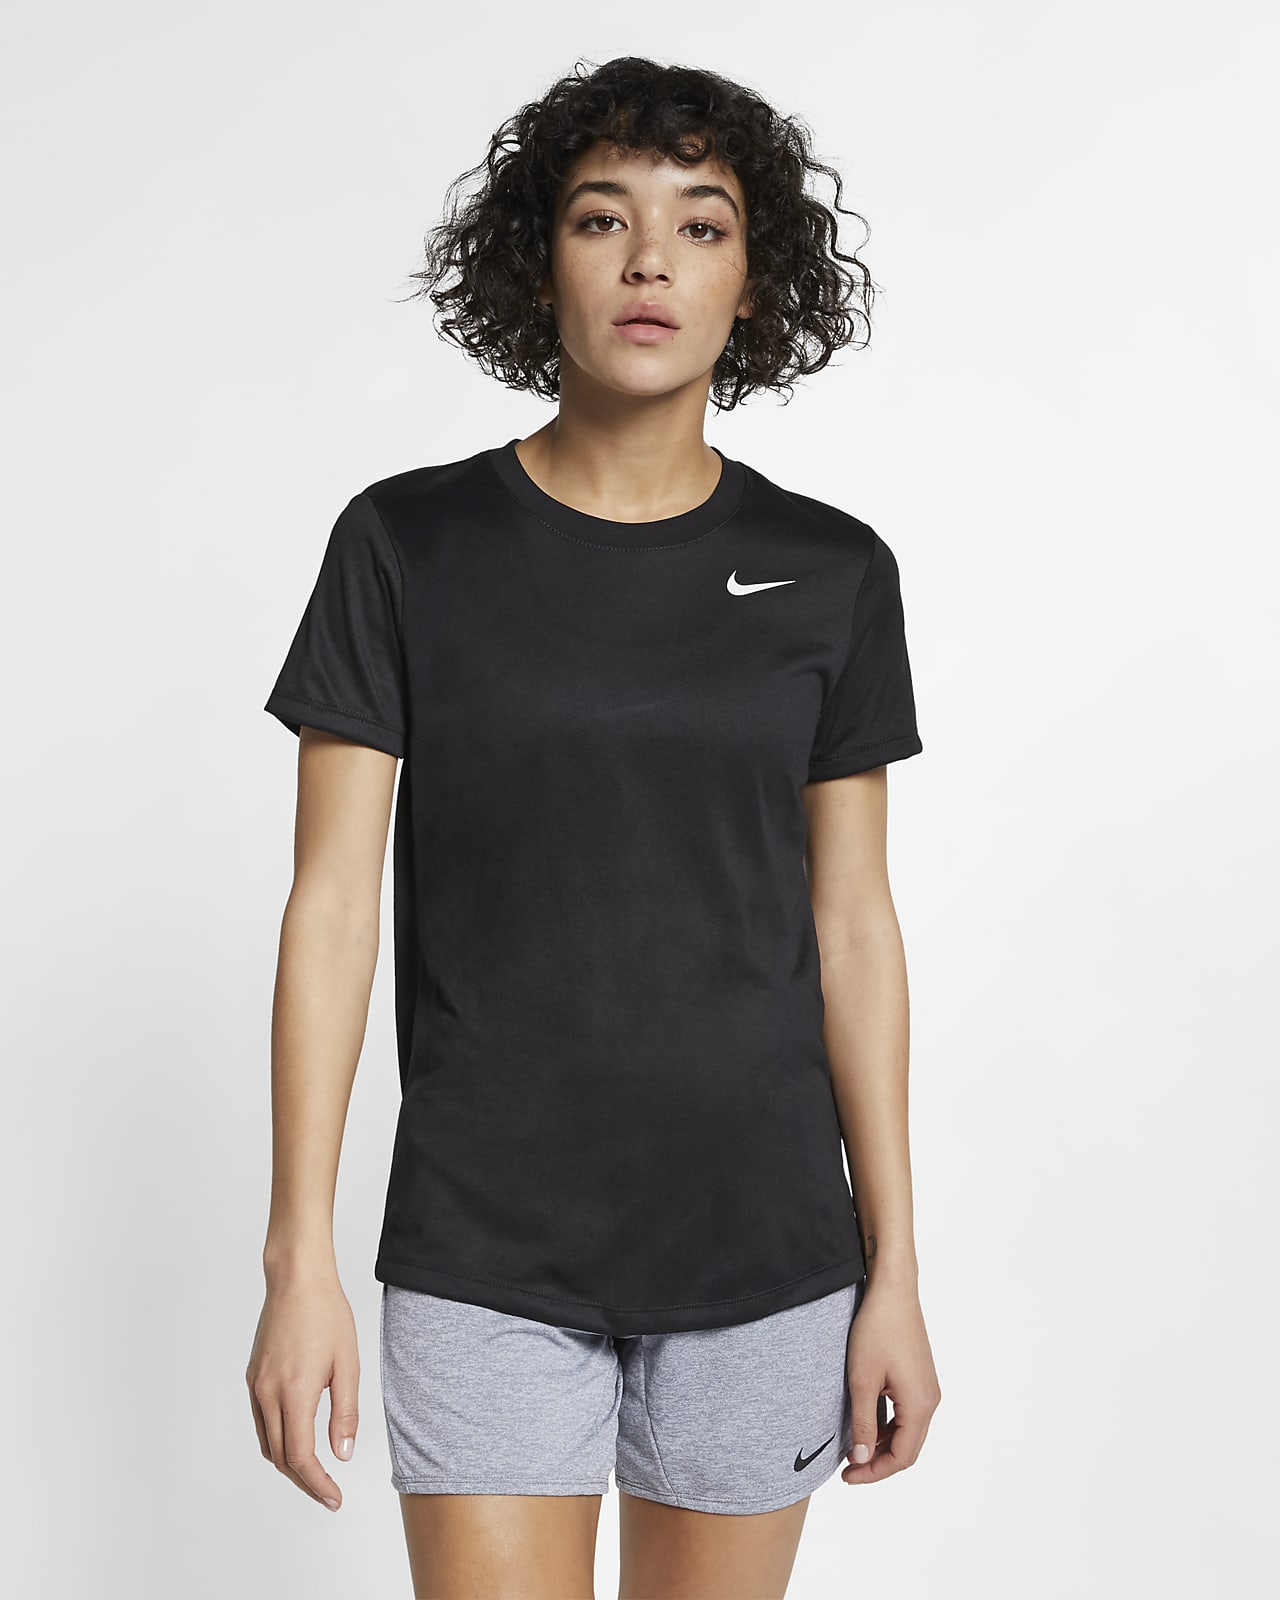 Ligegyldighed fajance Rettidig Nike Legend Women's Training T-Shirt. Nike ID